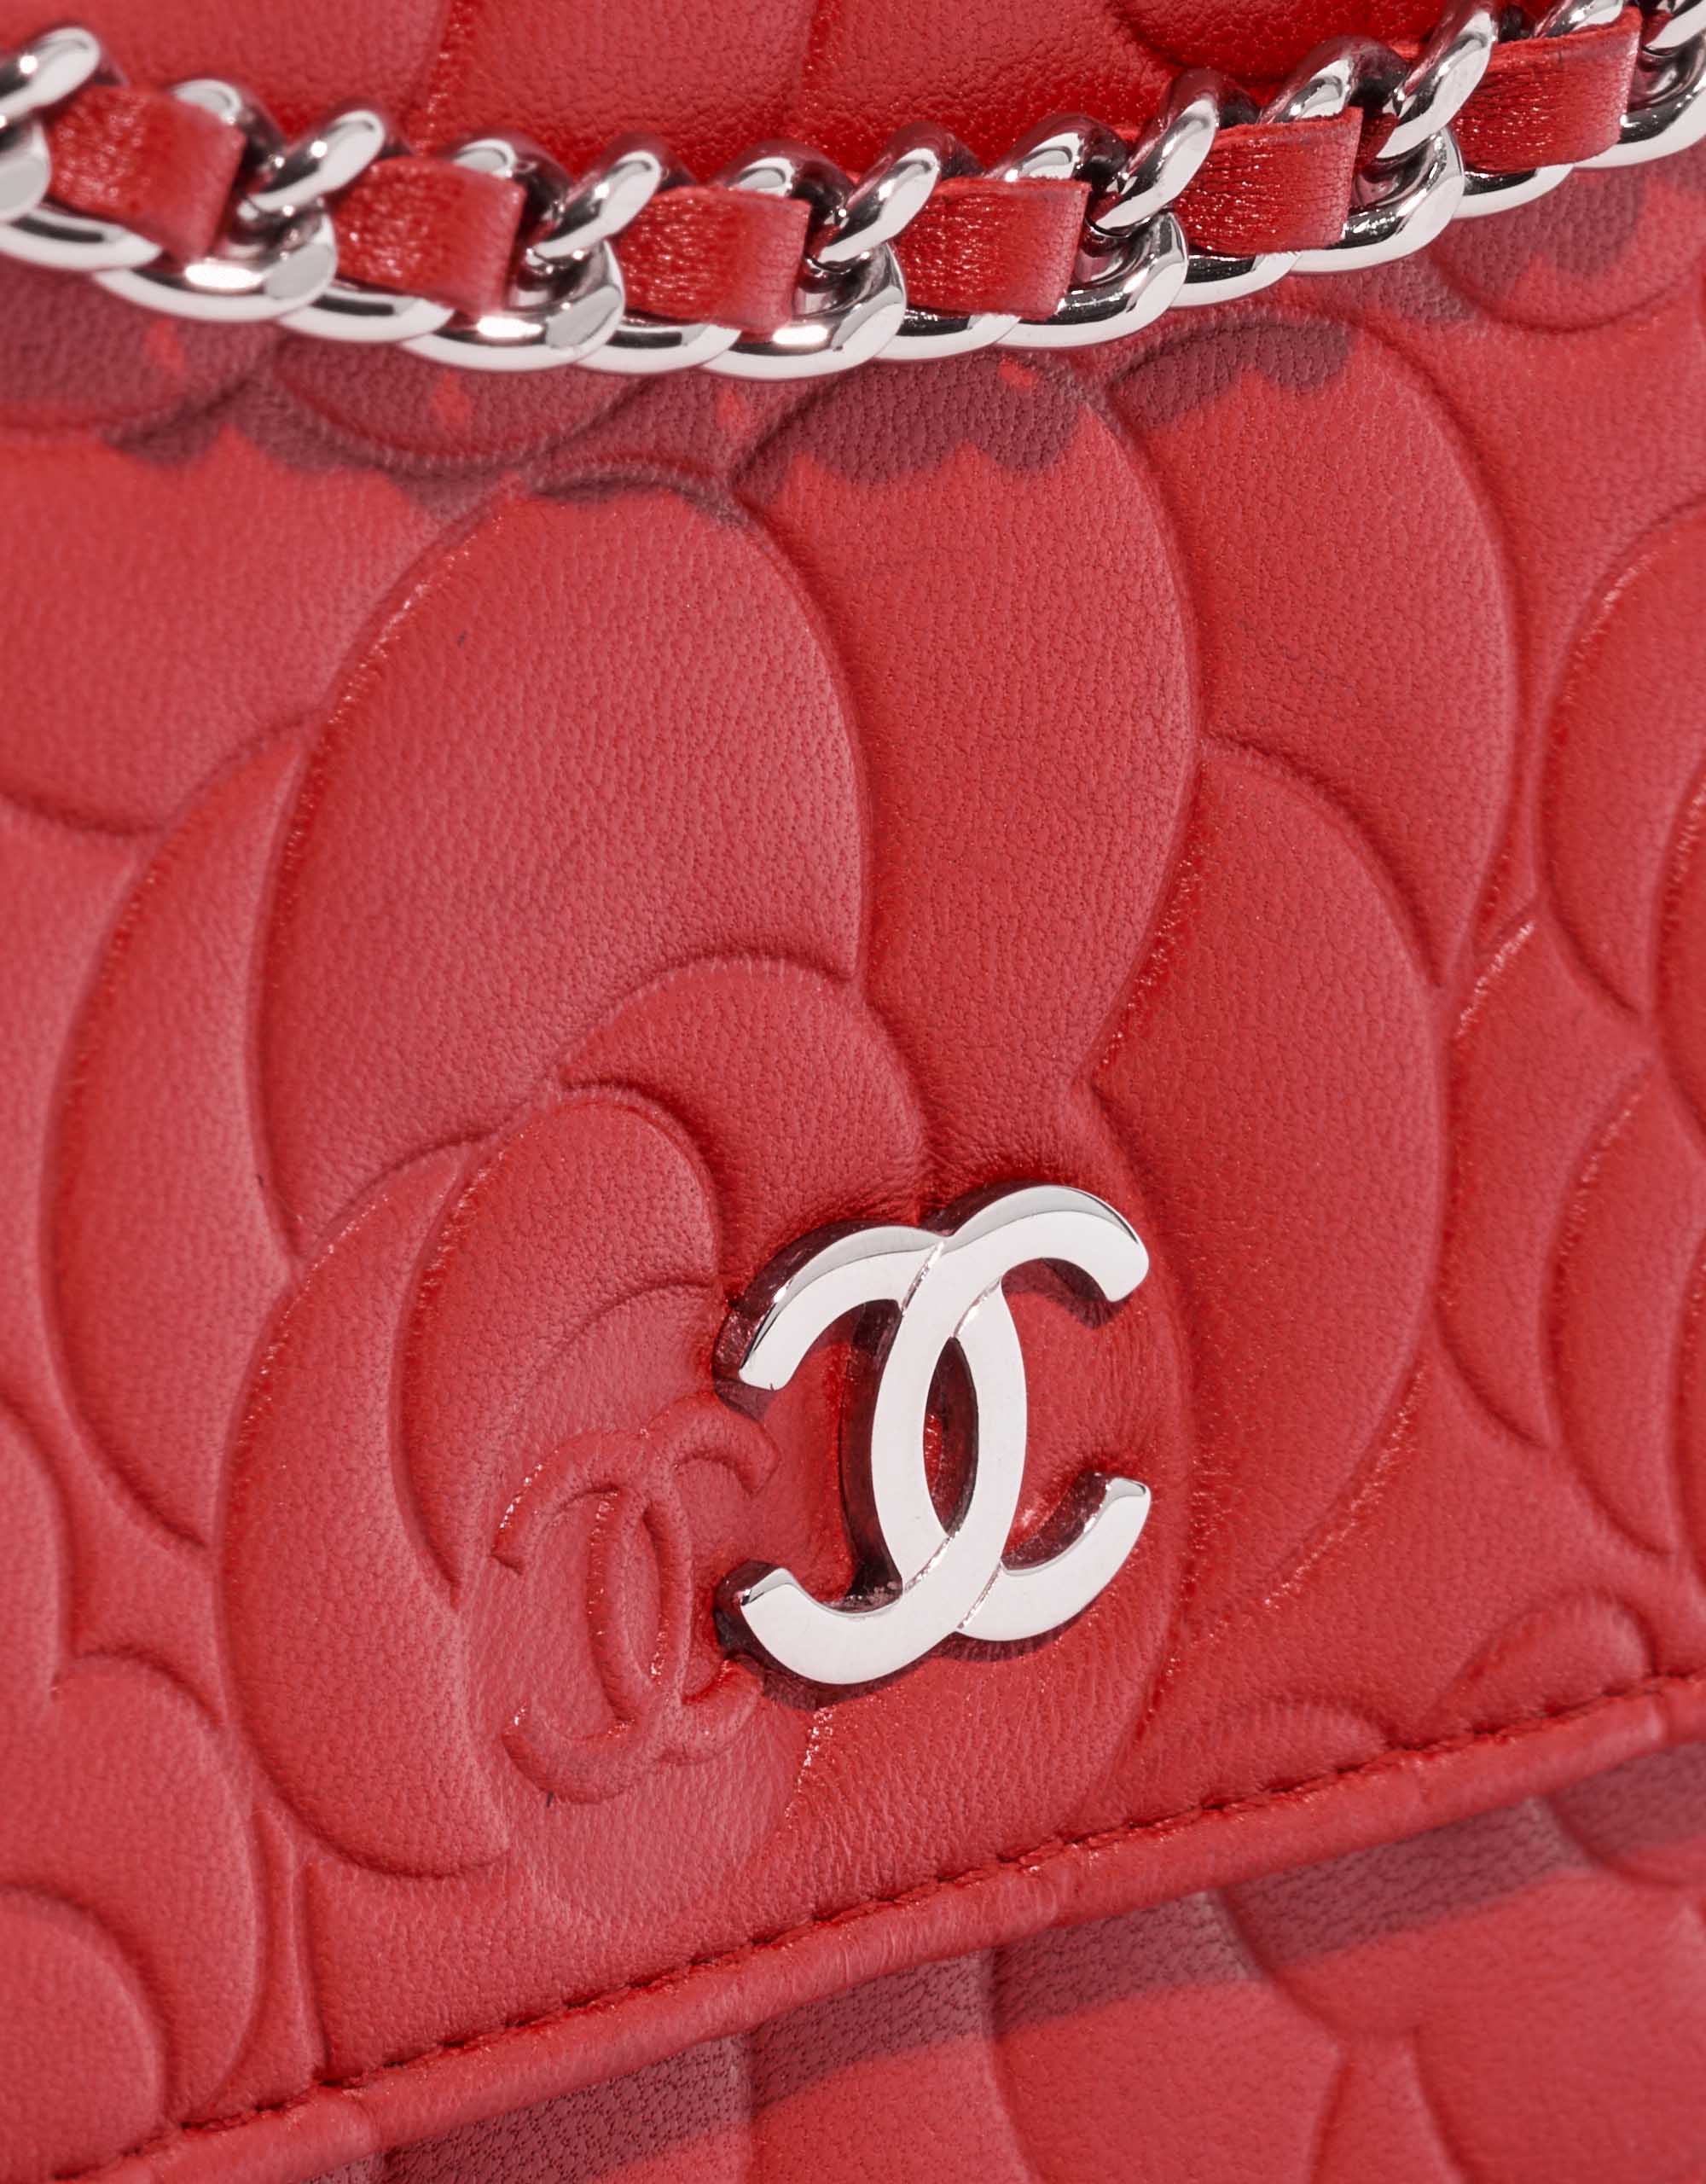 CHANEL Camellia Bags  Handbags for Women  Authenticity Guaranteed  eBay